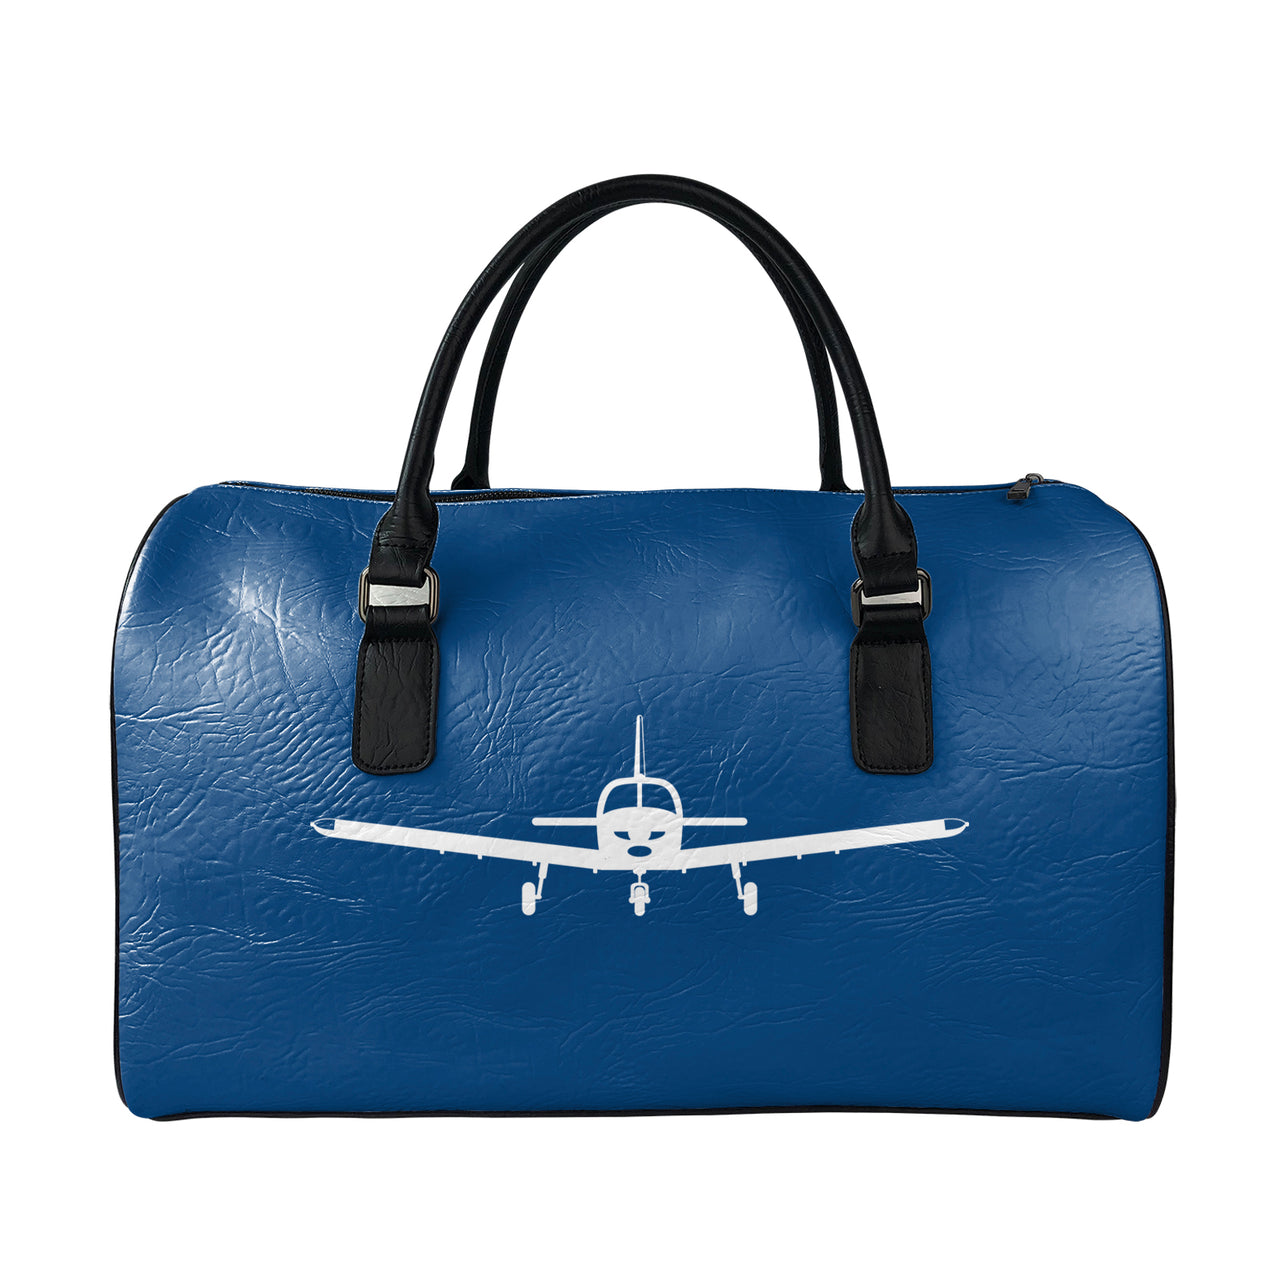 Piper PA28 Silhouette Plane Designed Leather Travel Bag